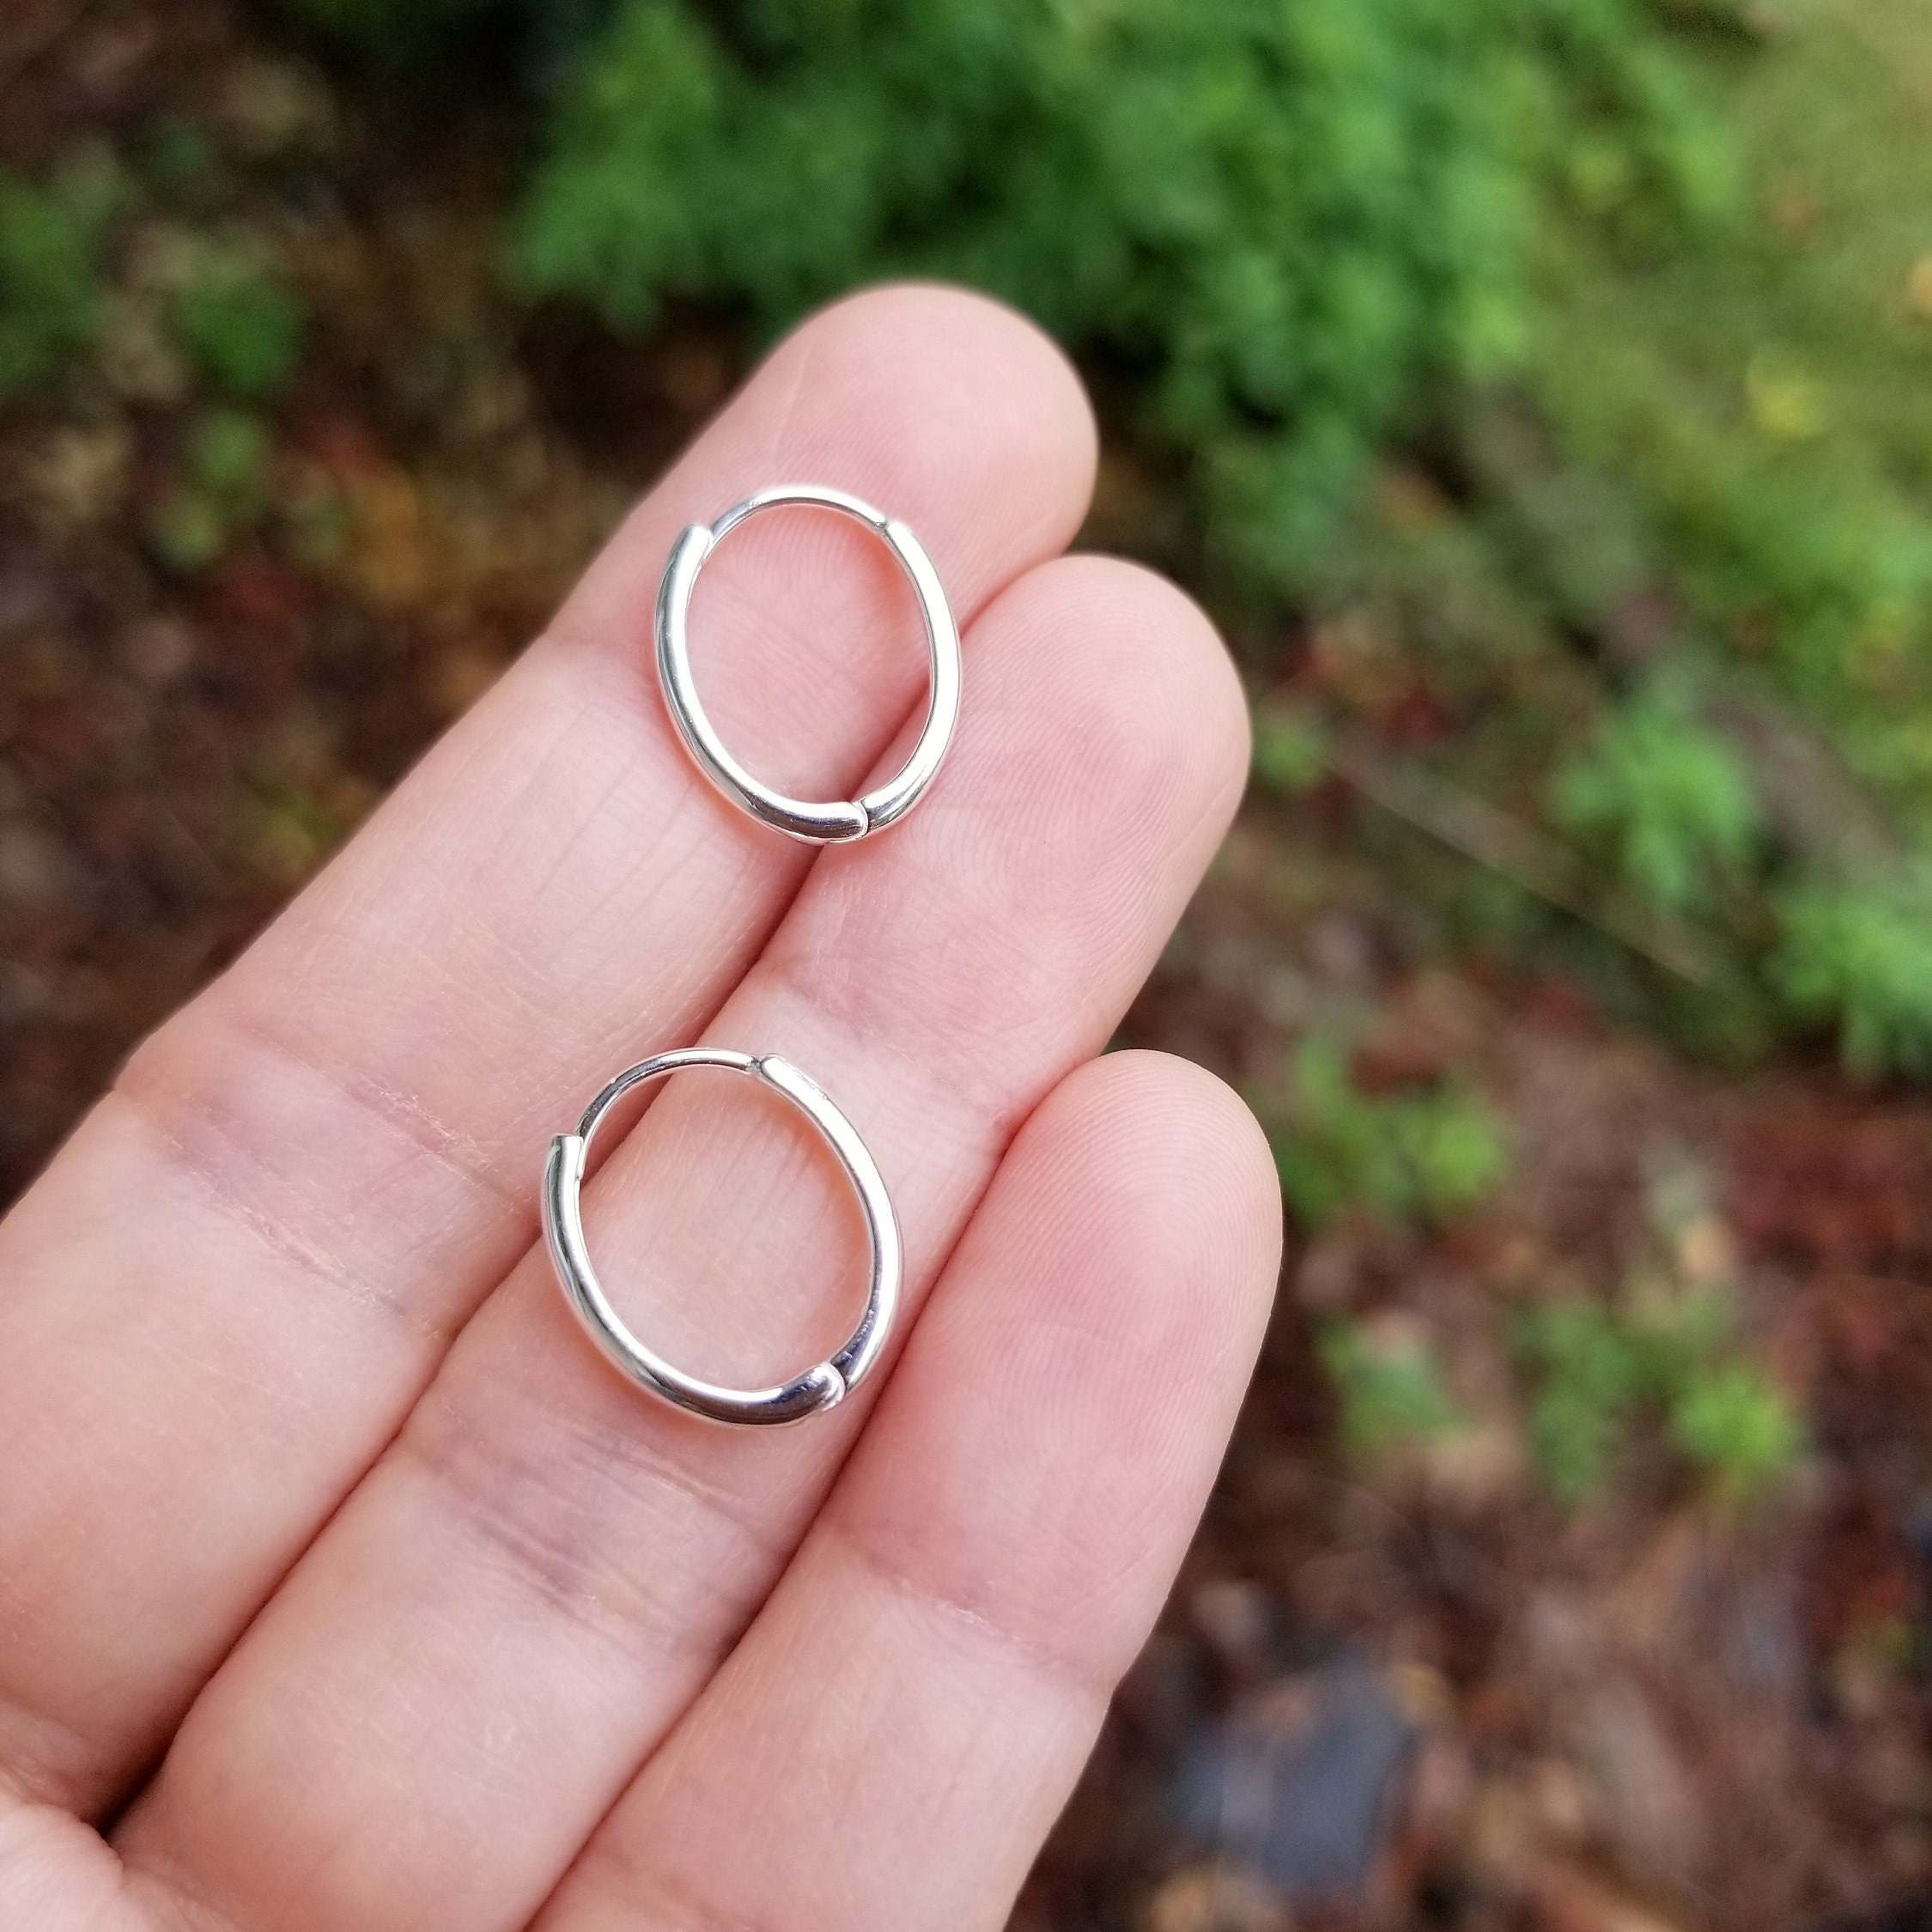 Oval Hoop Earrings Sterling Silver Huggie Earrings Small 